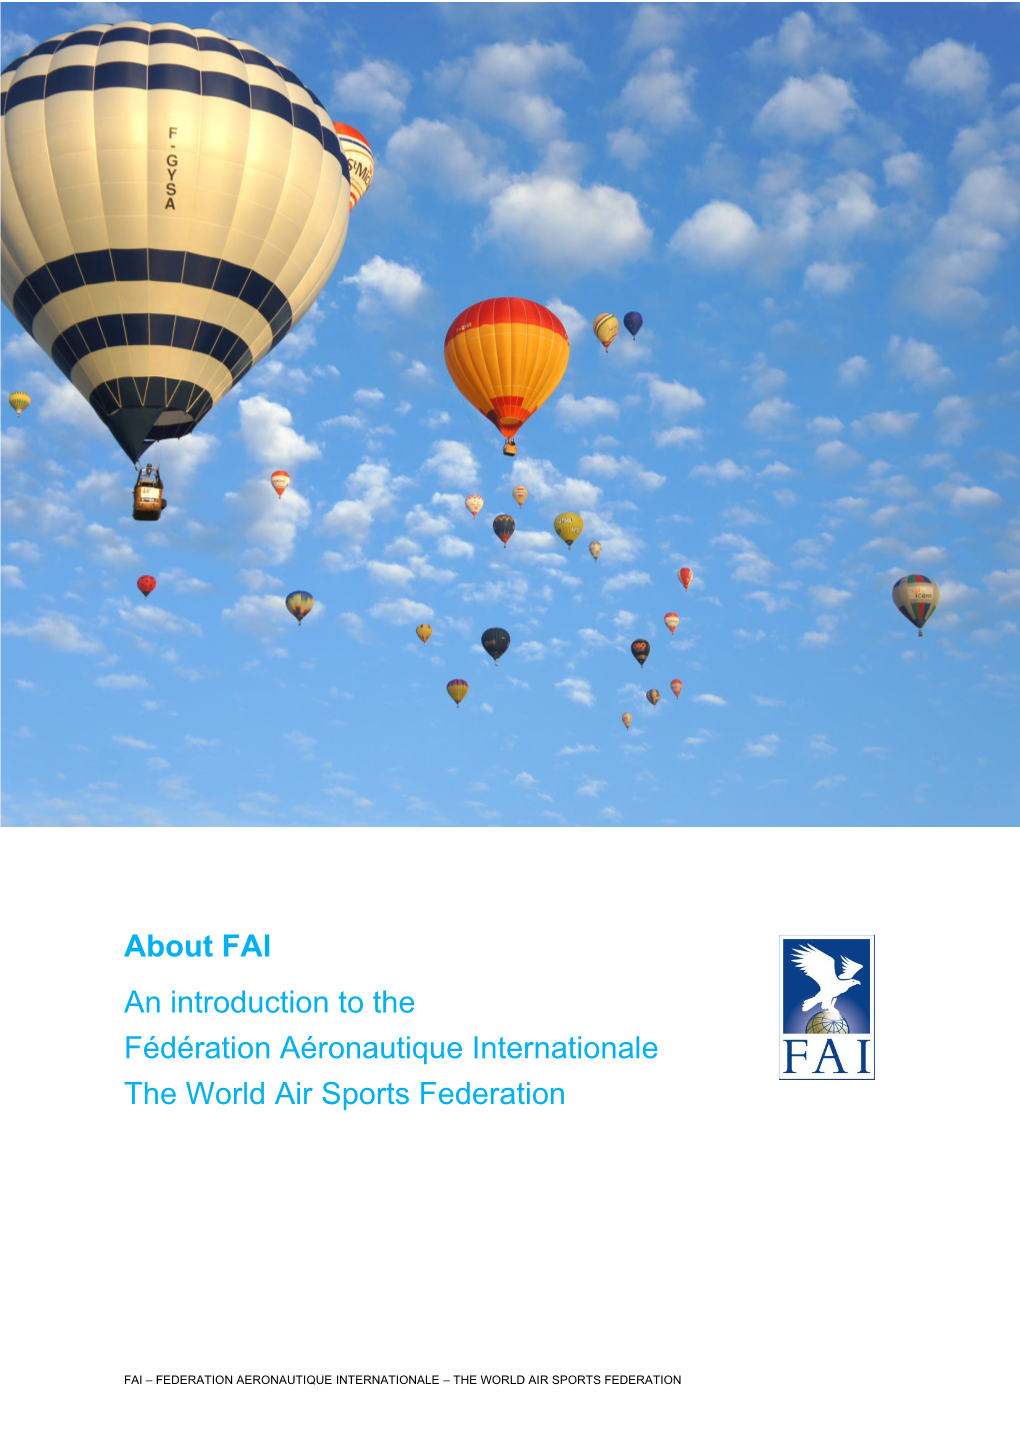 About FAI an Introduction to the Fédération Aéronautique Internationale the World Air Sports Federation